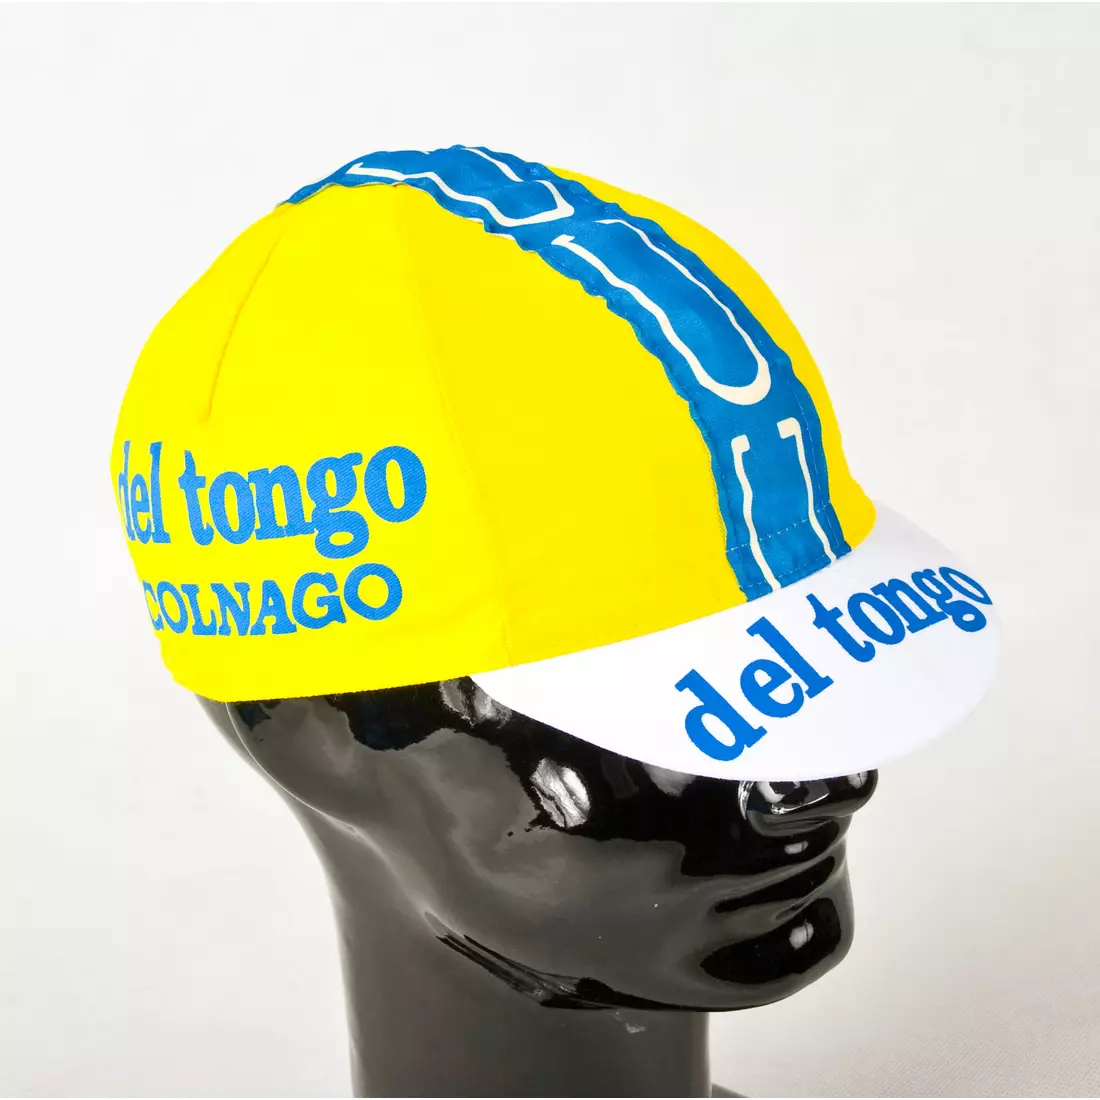 Apis Profi DEL TONGO cycling cap, yellow and white